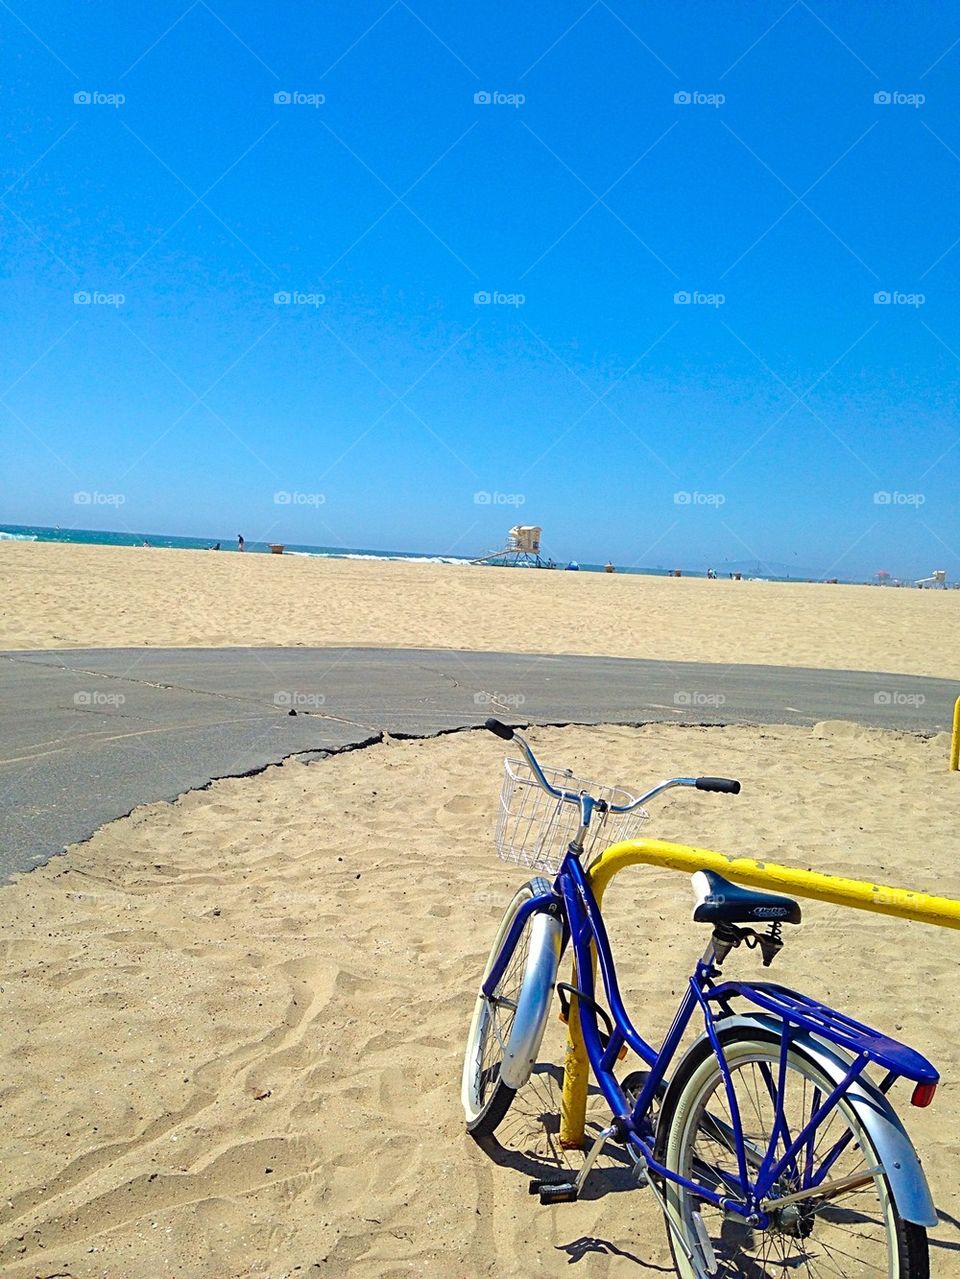 Bike to the Beach